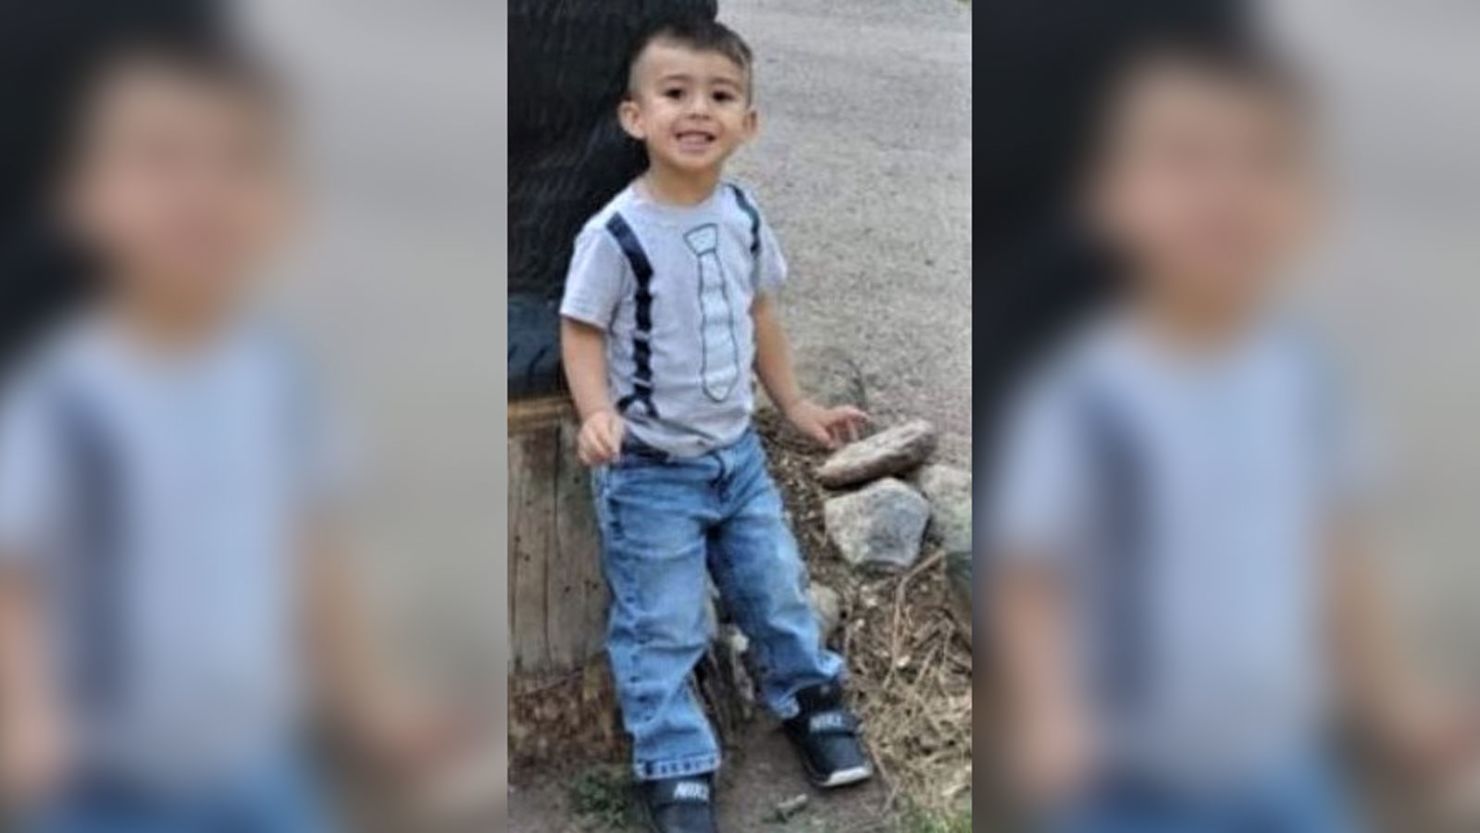 Osiel Rico, 3, was last seen January 5